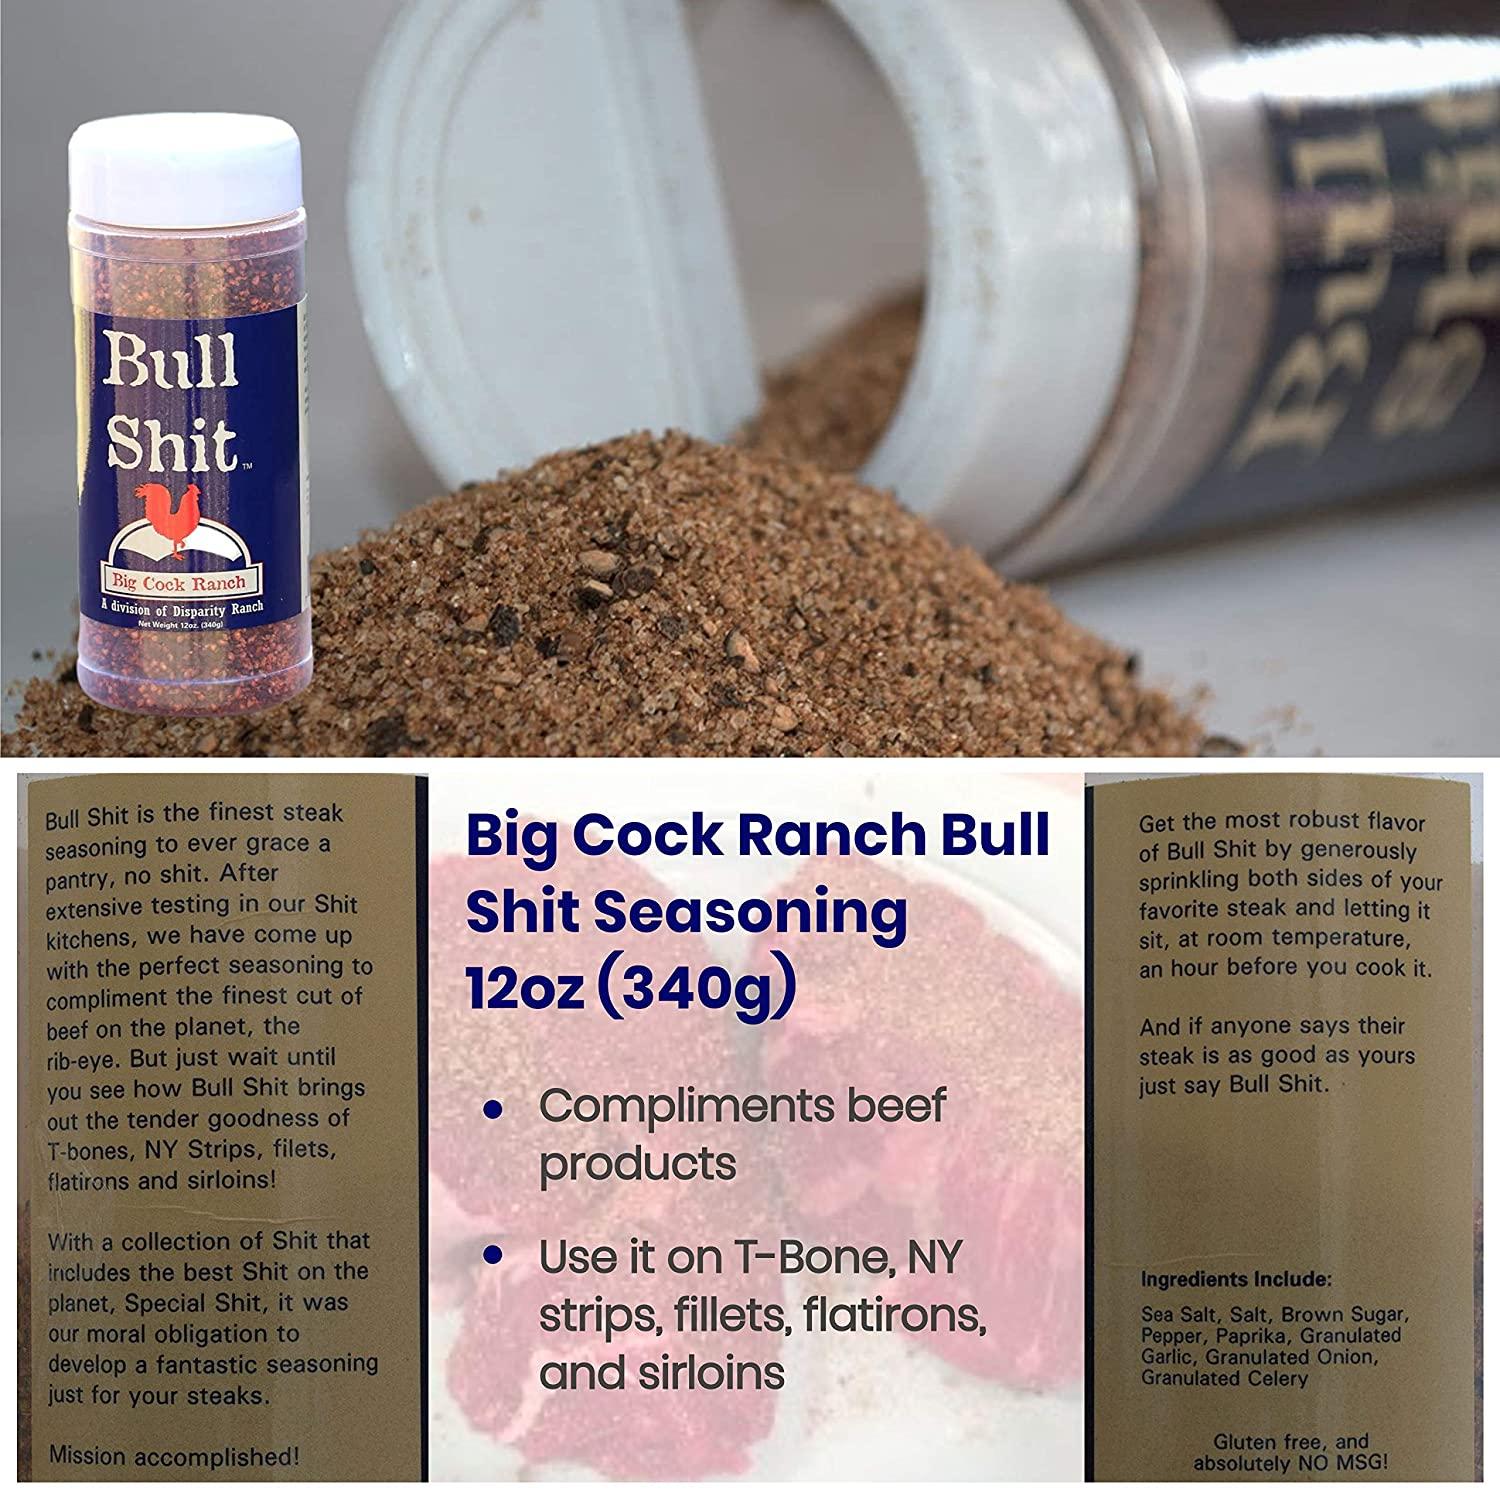 Big Cock Ranch Special Shit Premium All Purpose Seasoning (Original Version)